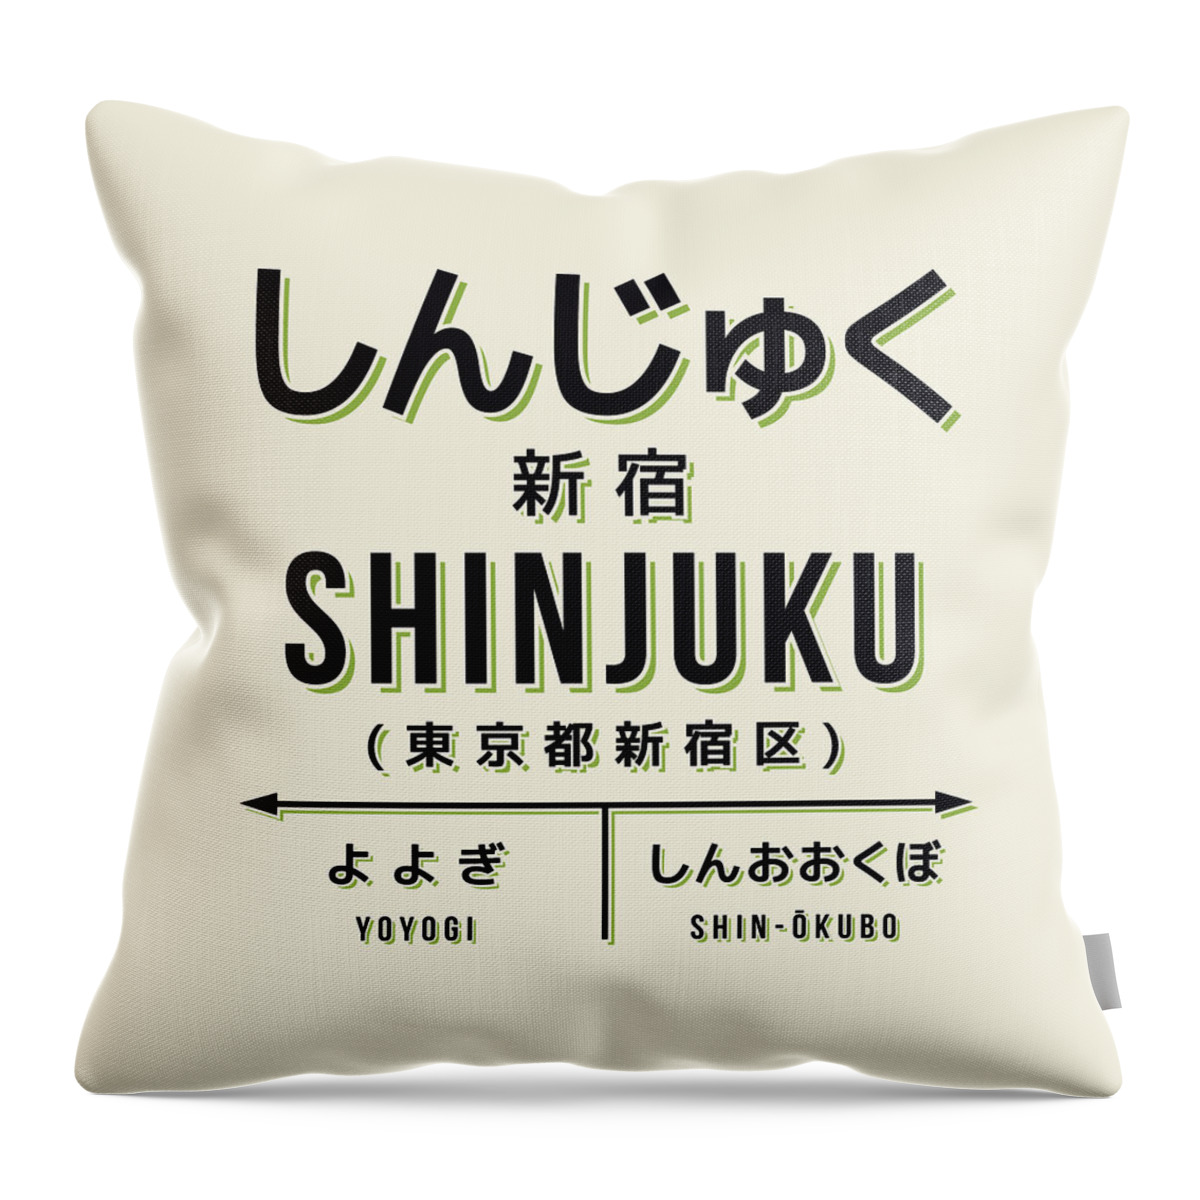 Japan Throw Pillow featuring the digital art Vintage Japan Train Station Sign - Shinjuku Cream by Organic Synthesis